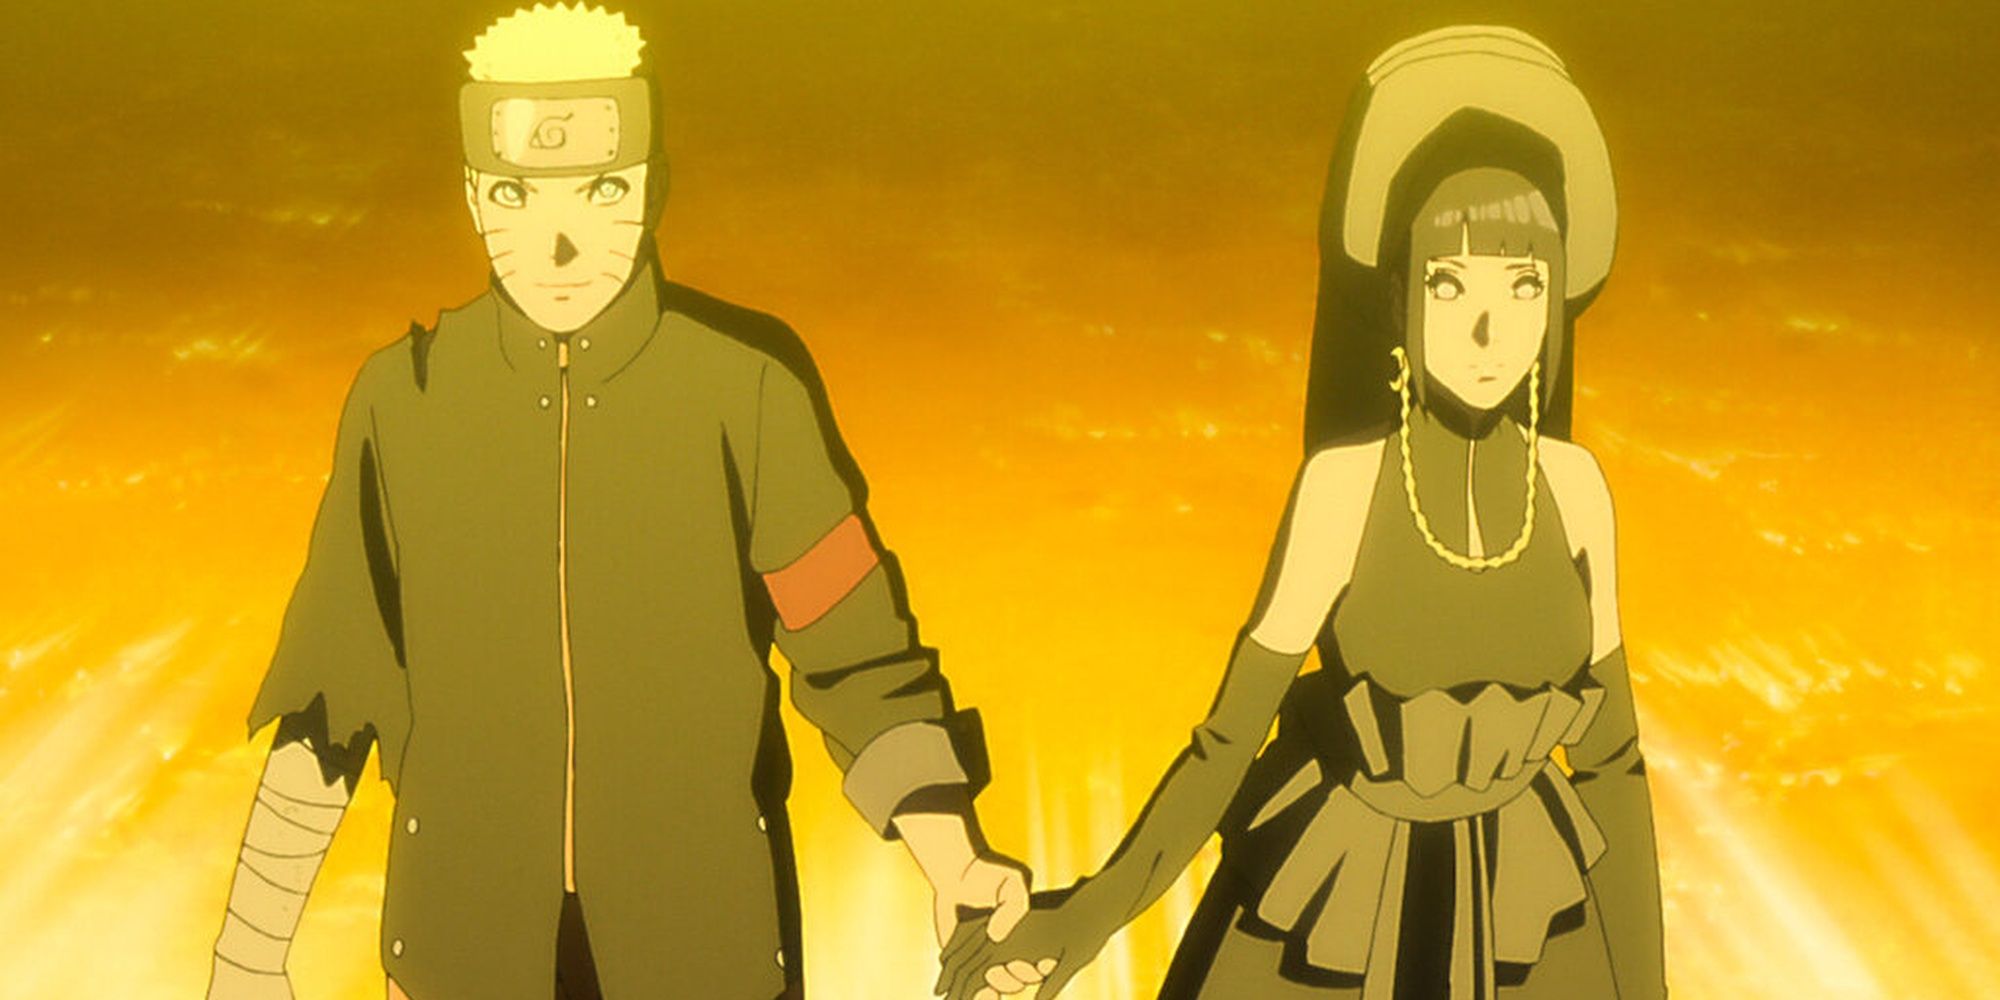 Naruto and Hinata getting ready to attack together